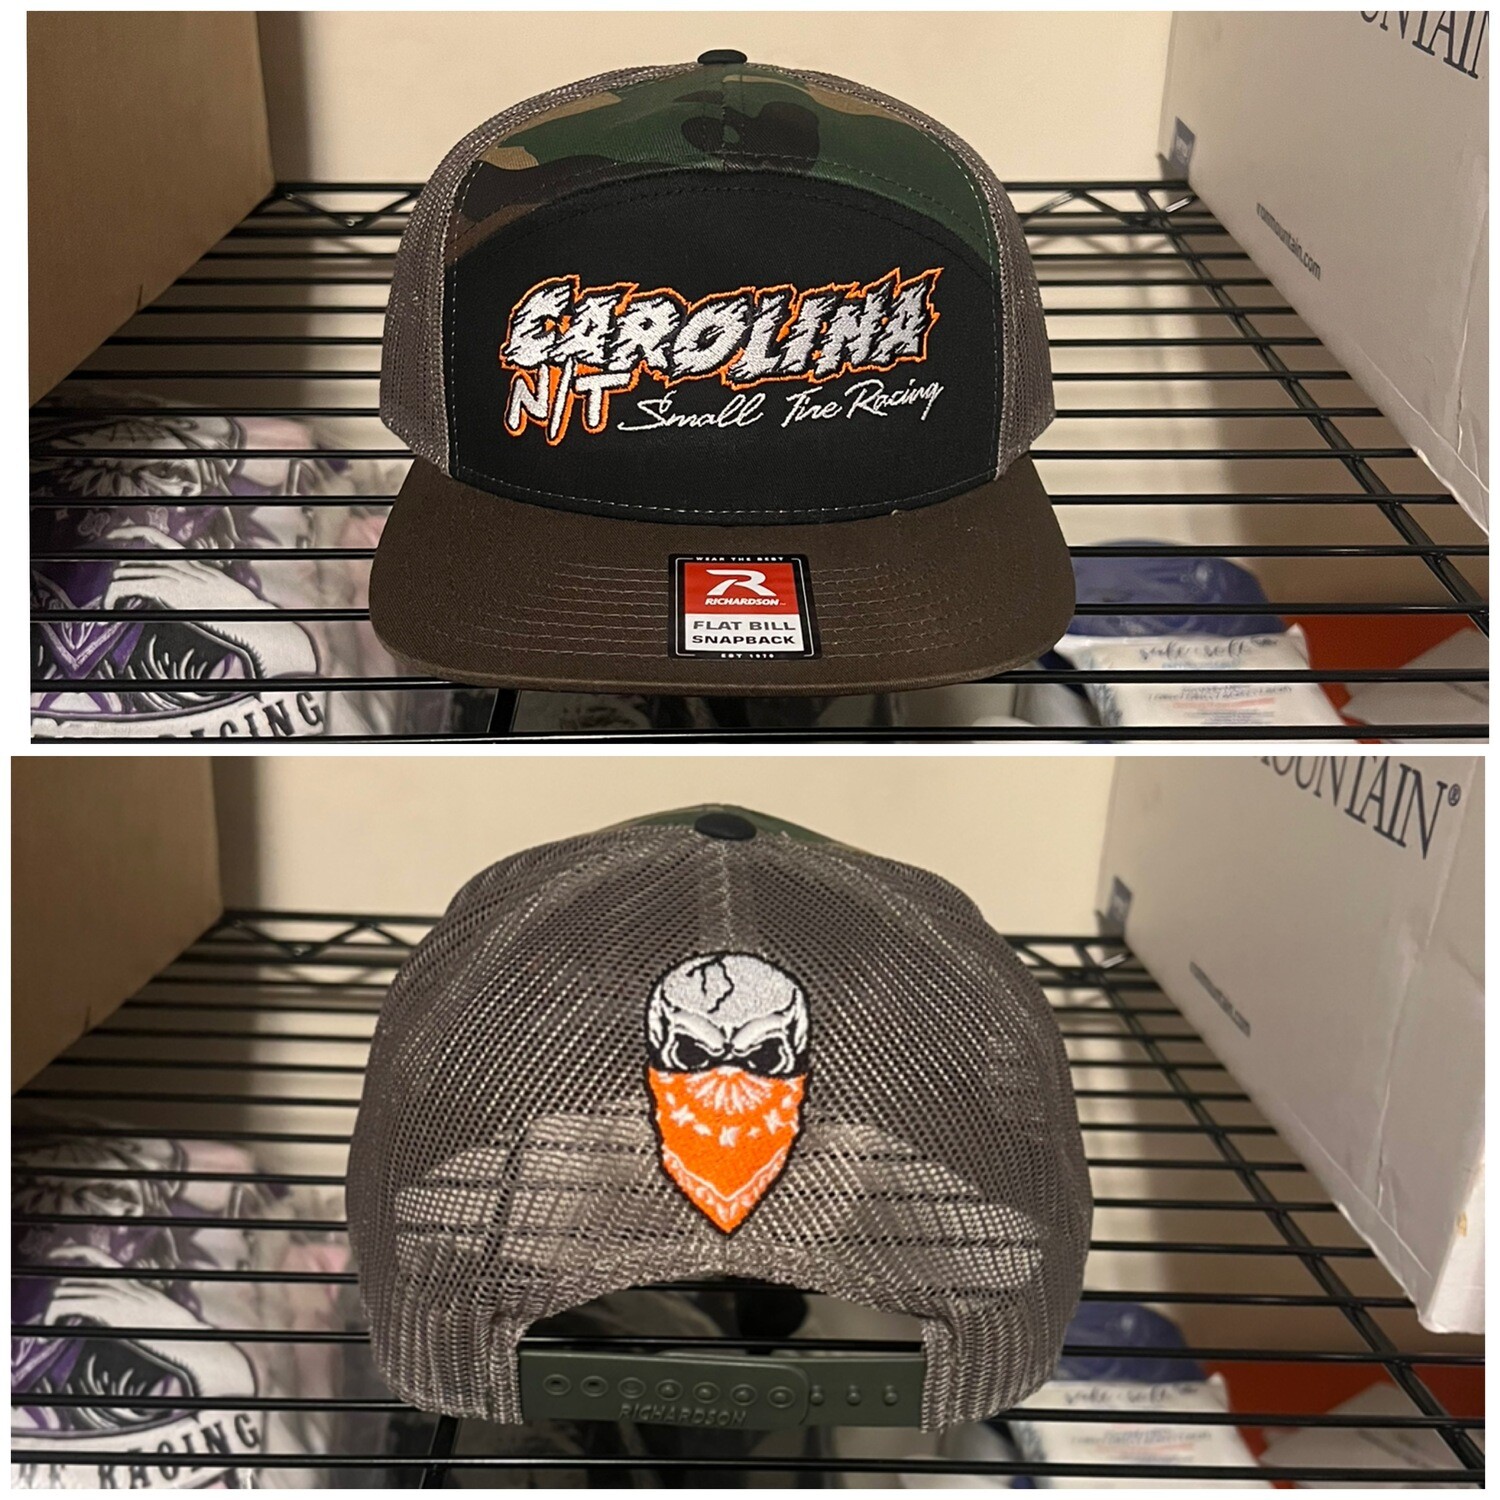 Camo/Orange/white New style letters trucker hat